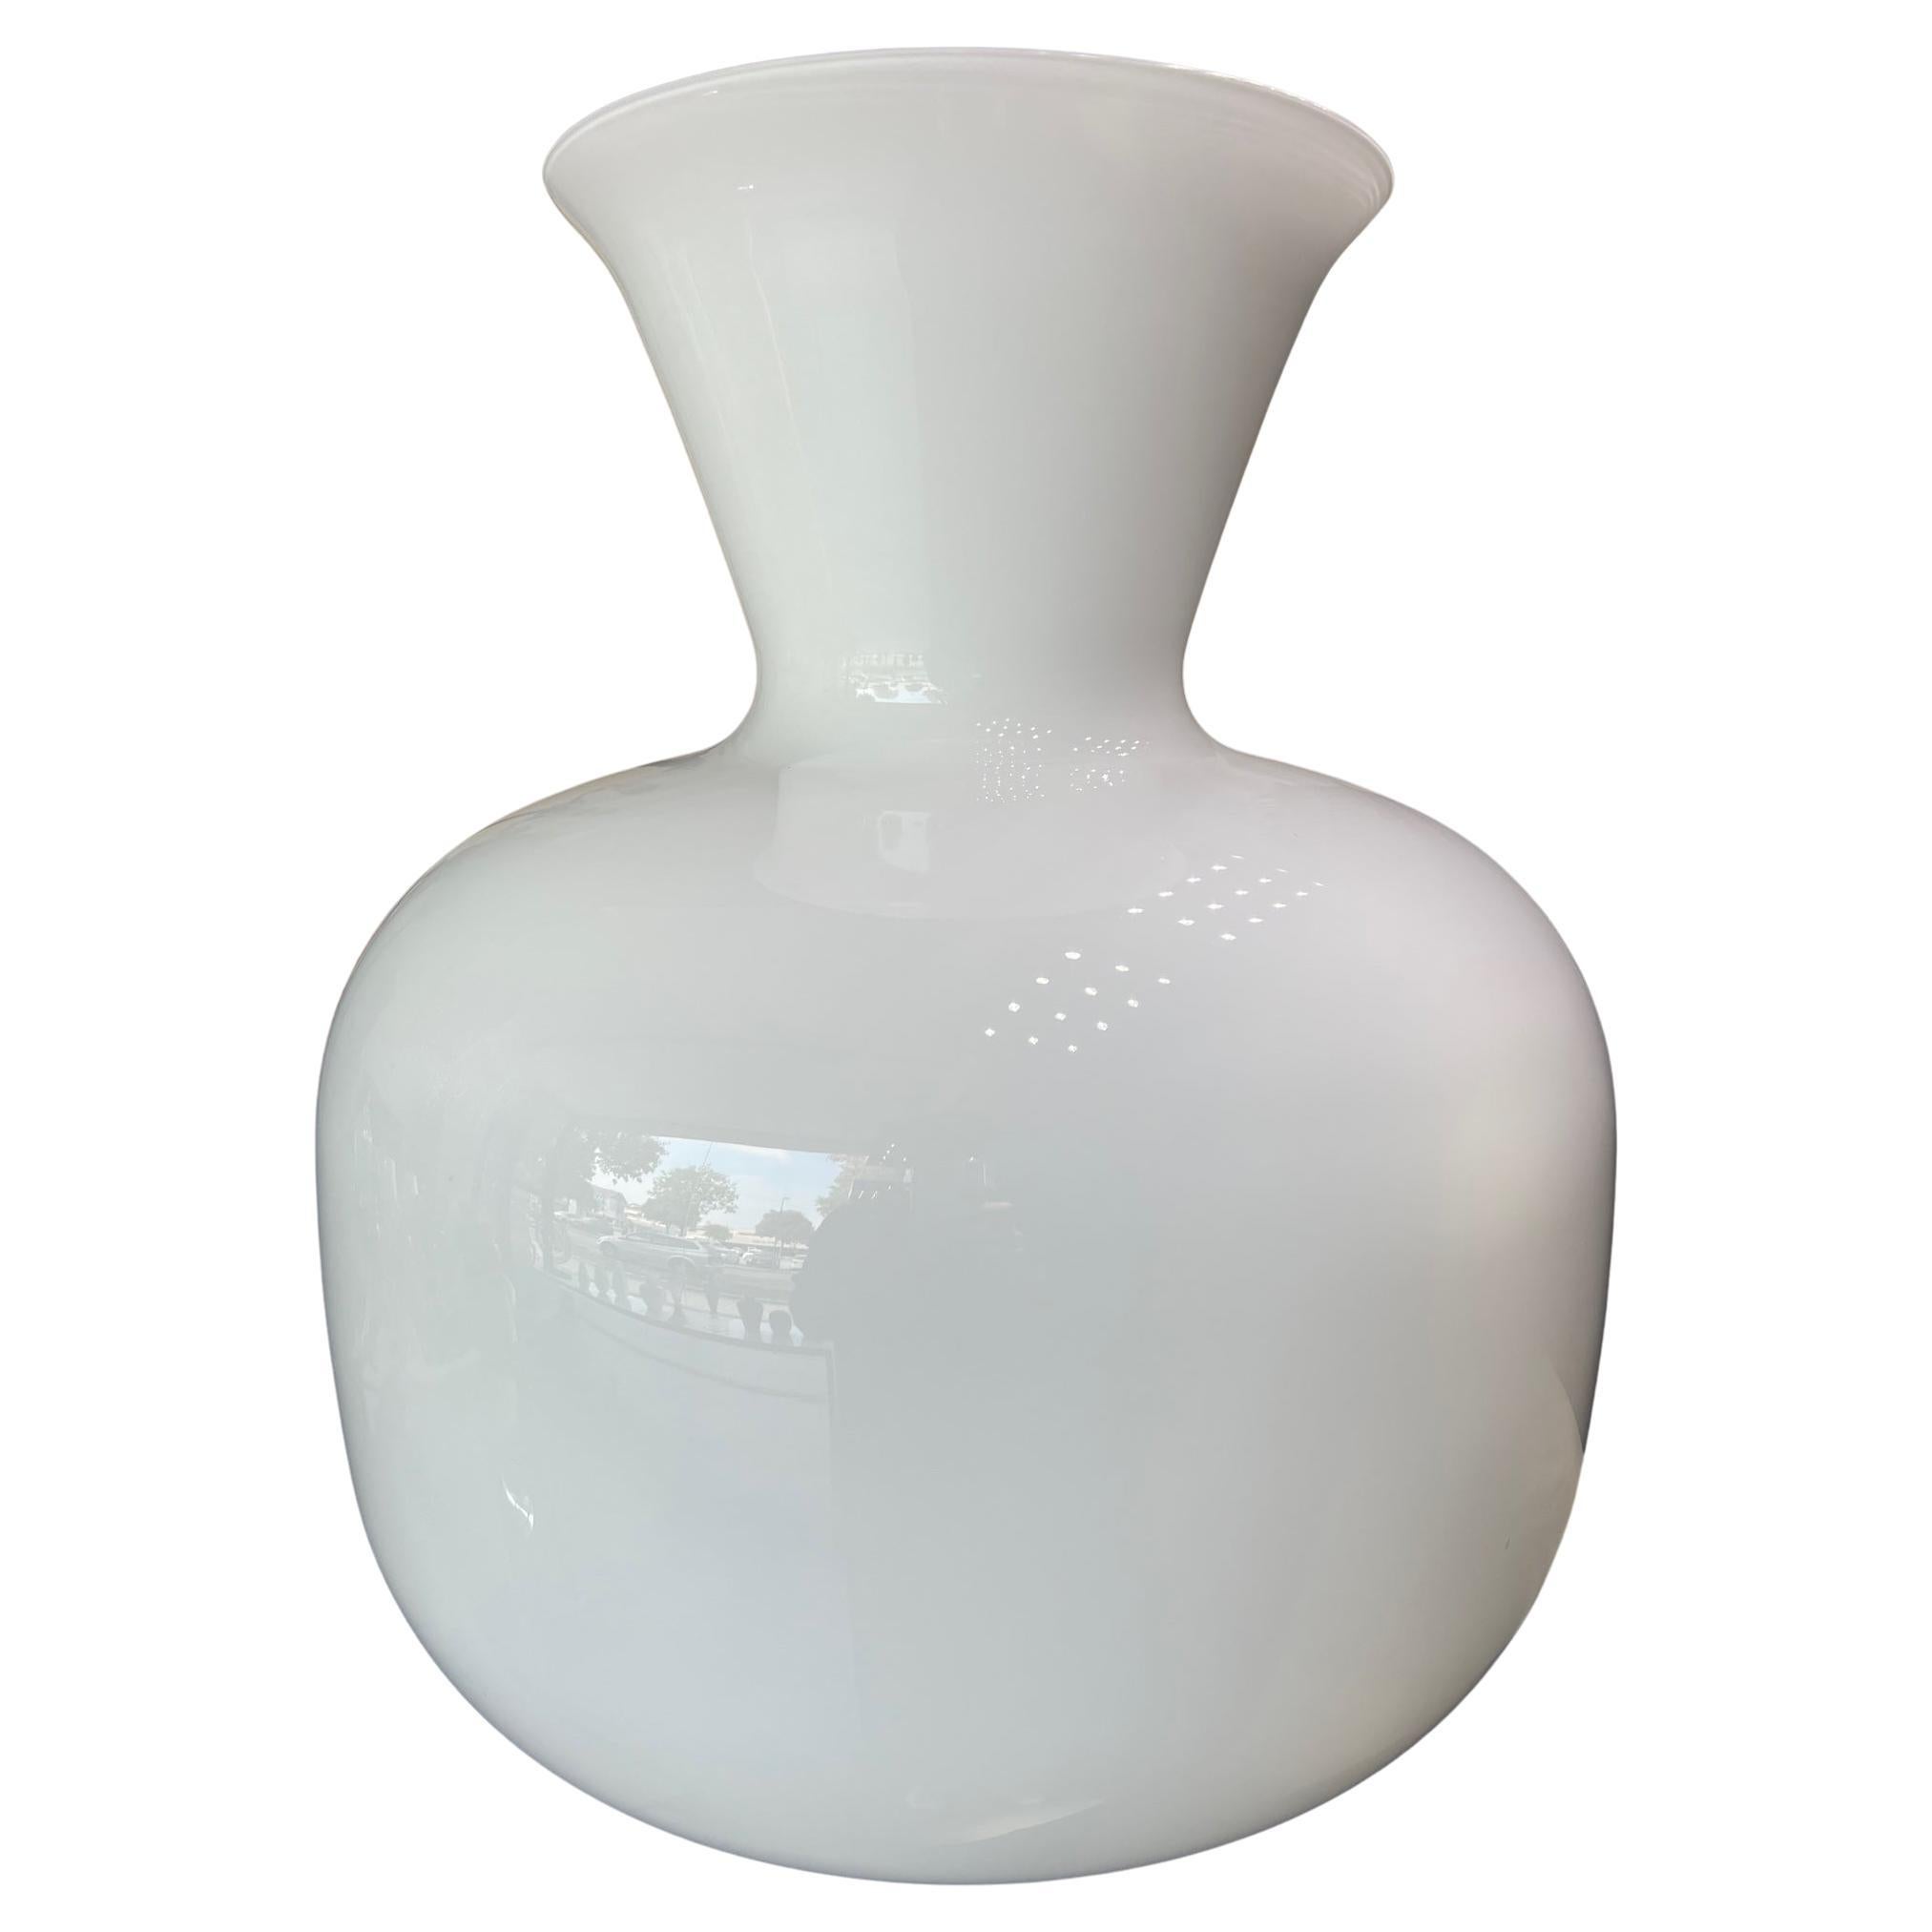 1295 - Murano - Design en verre de Murano blanc soufflé à la main